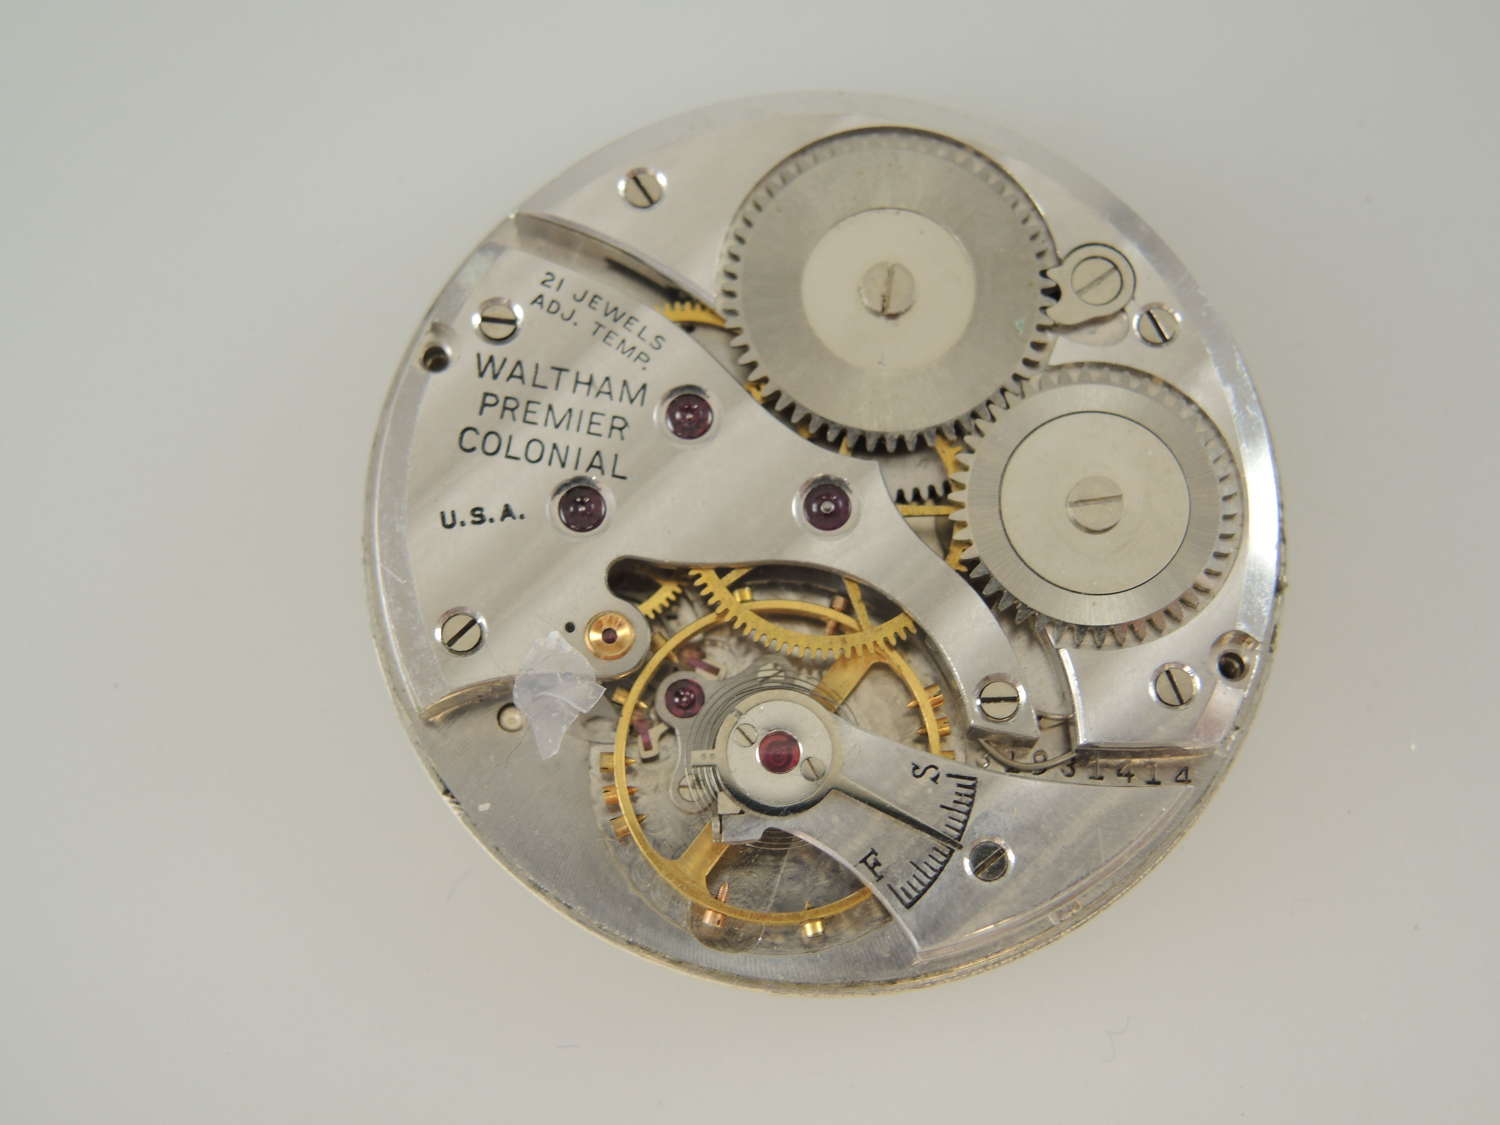 12s 21J Waltham Premier Colonial pocket watch movement c1940